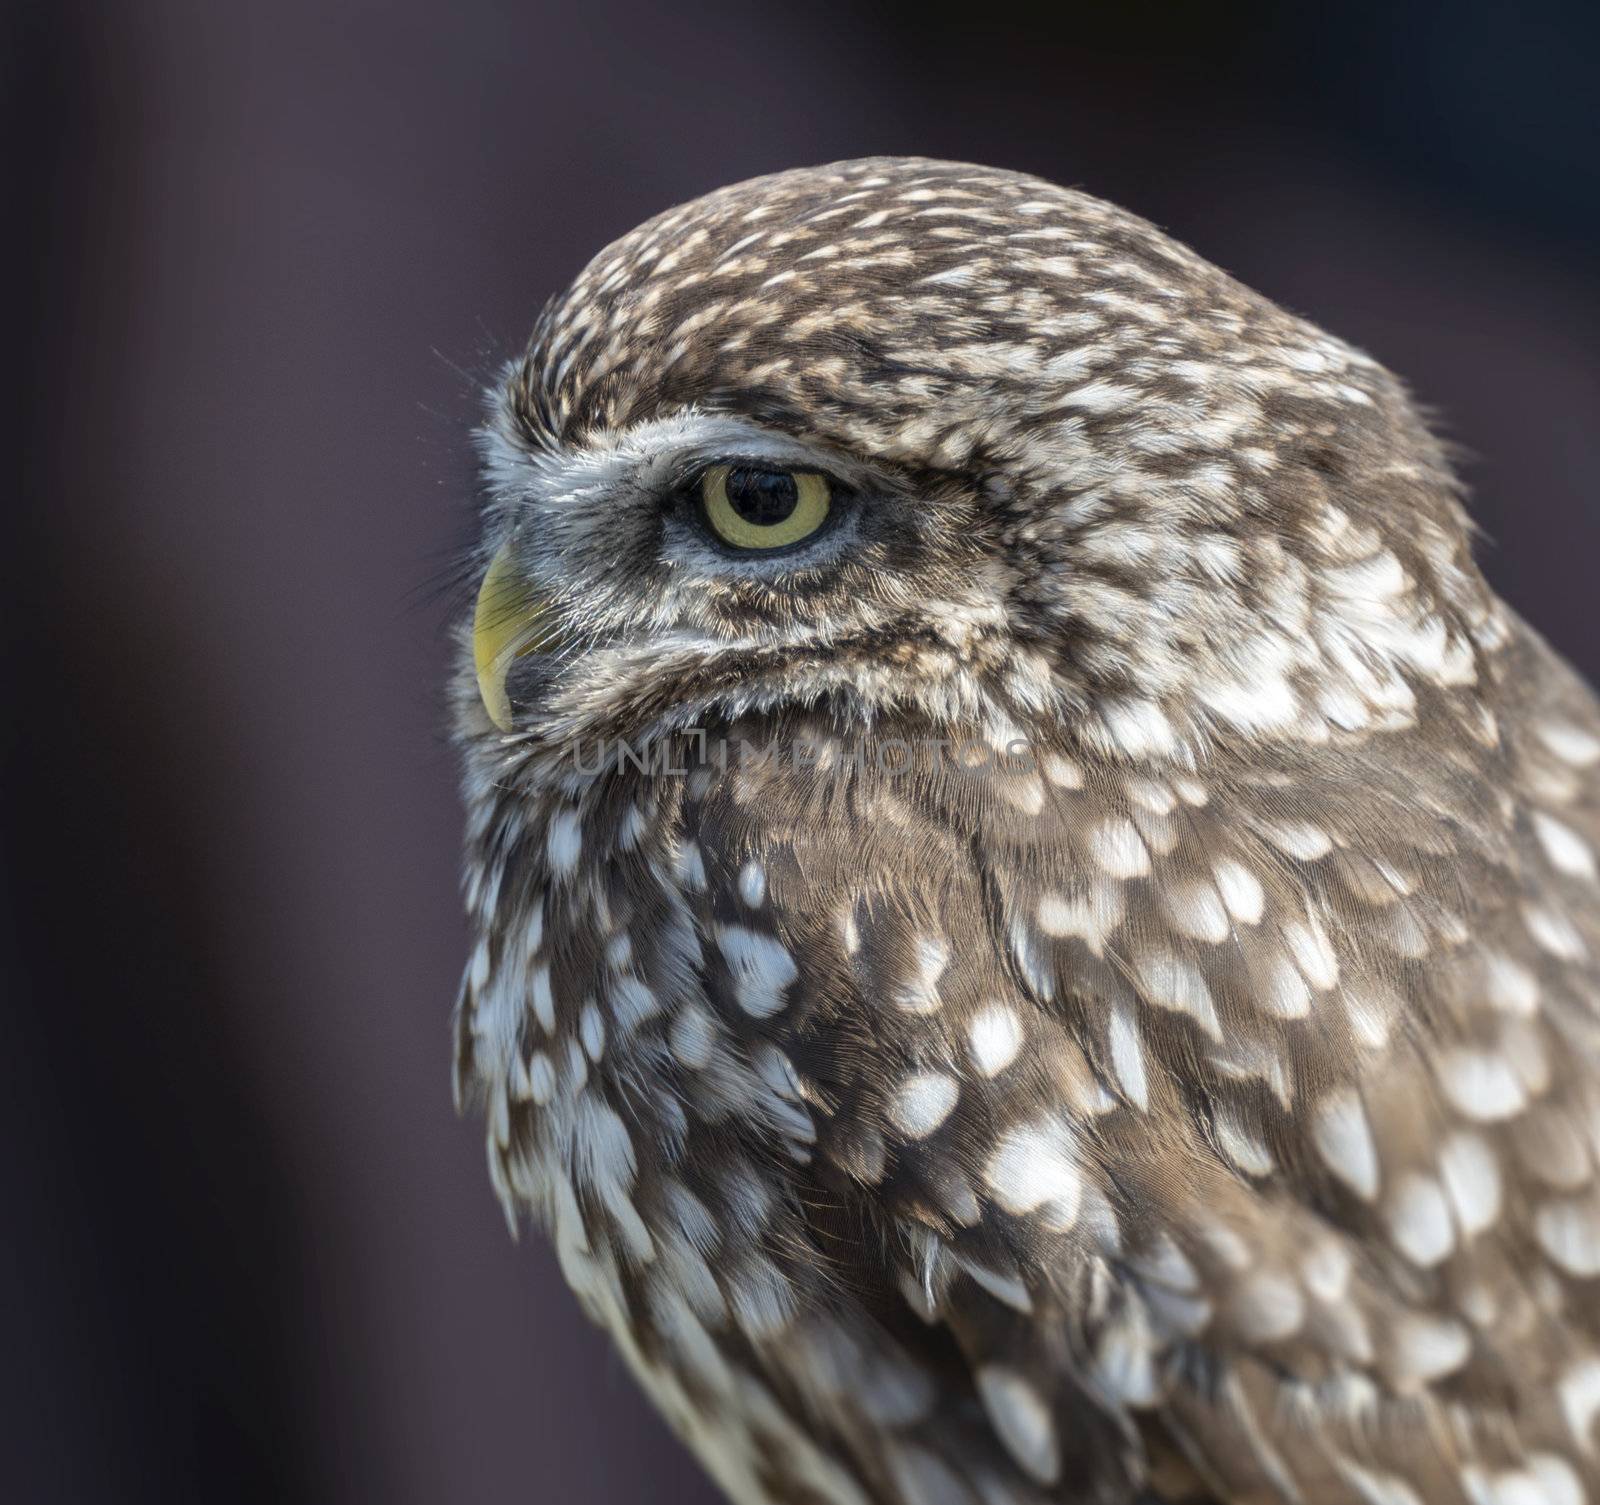 small screech owl on bird show